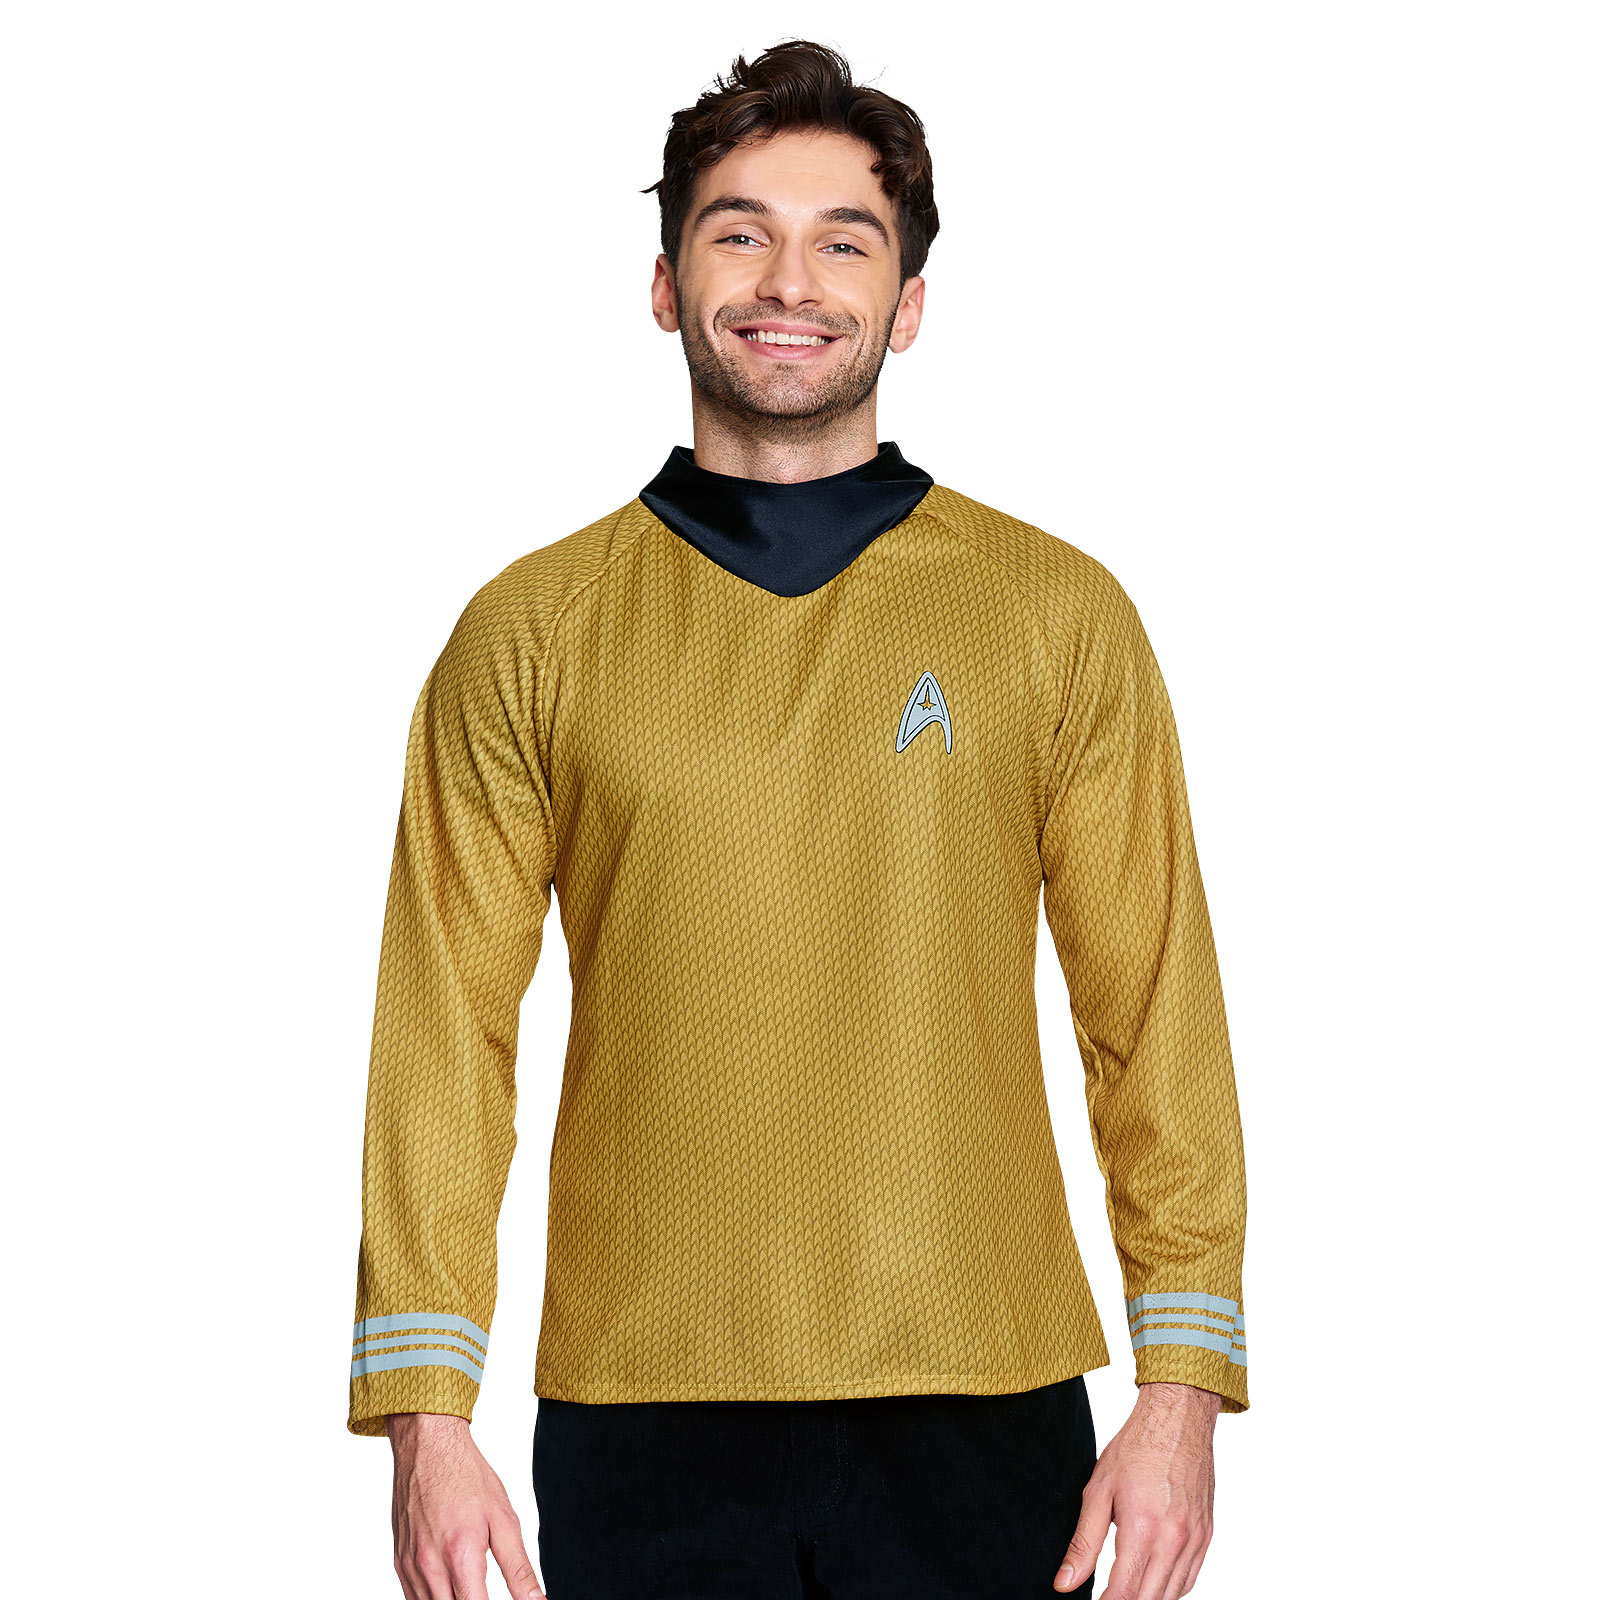 Star Trek - Captain Kirk Movie Kostüm Shirt